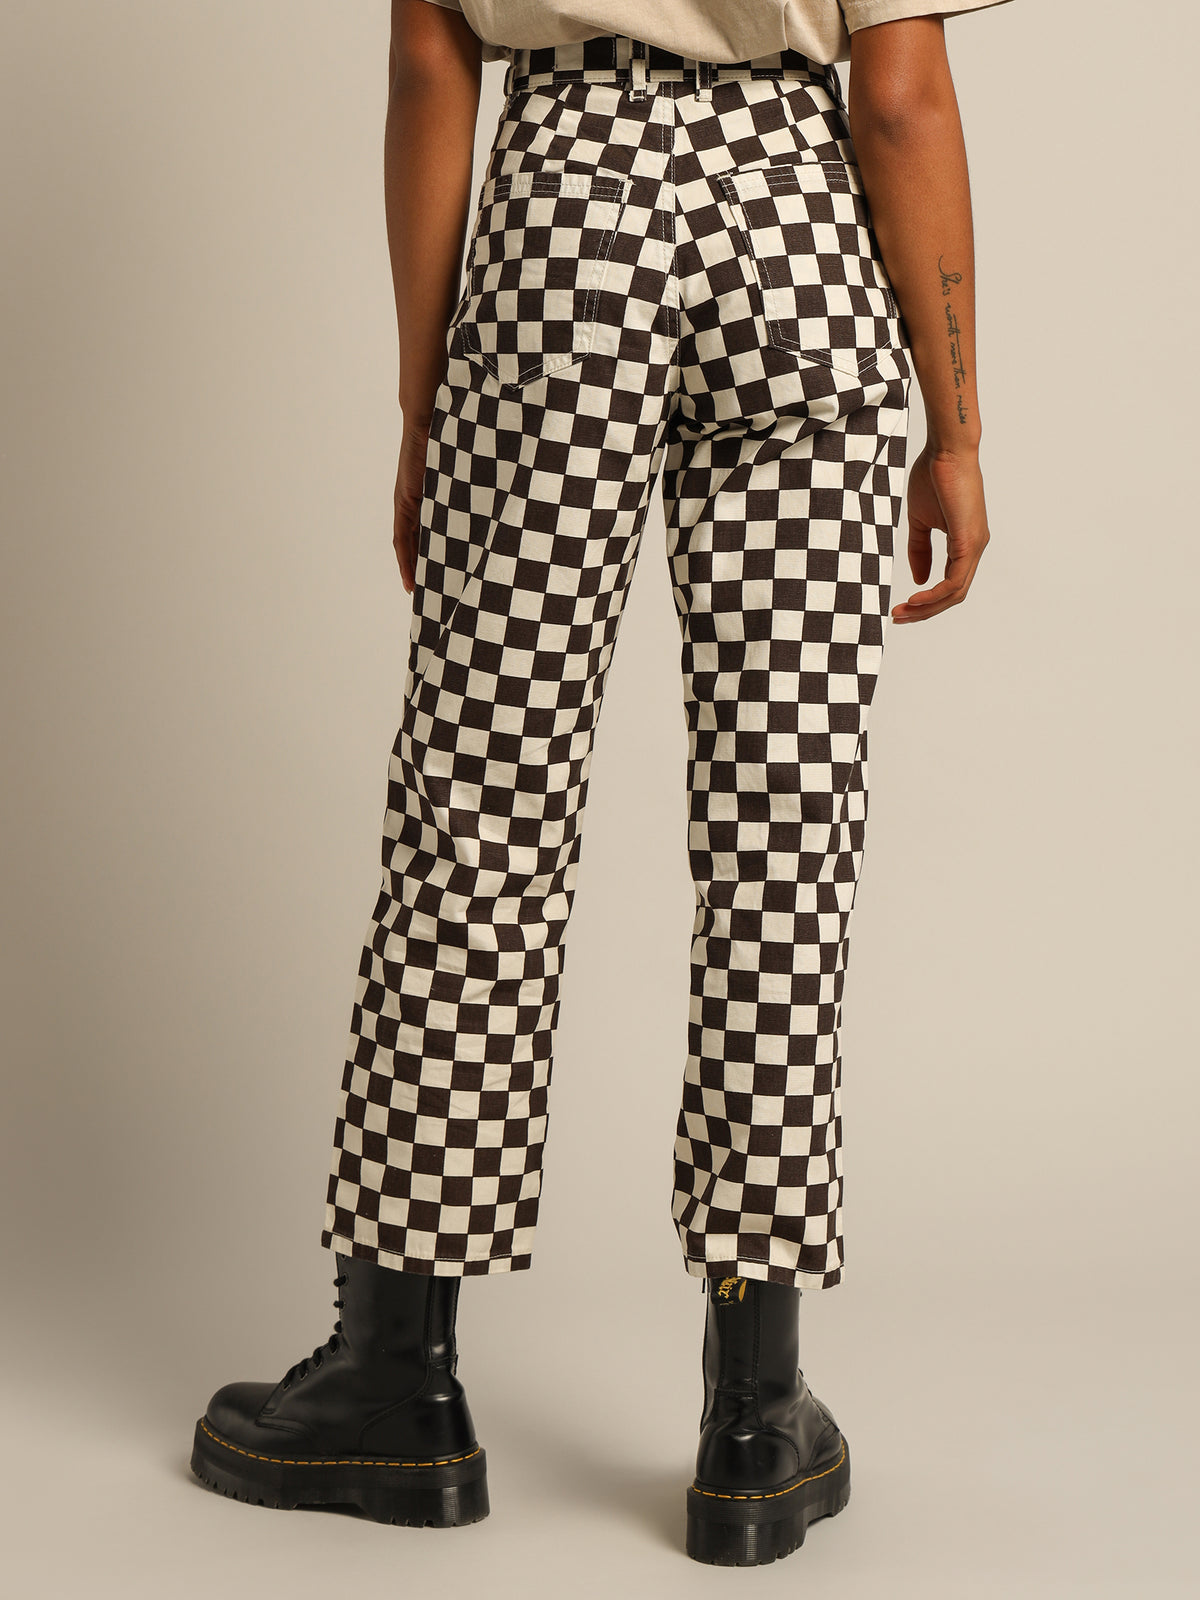 Aalto Pant in Cocoa Checkerboard